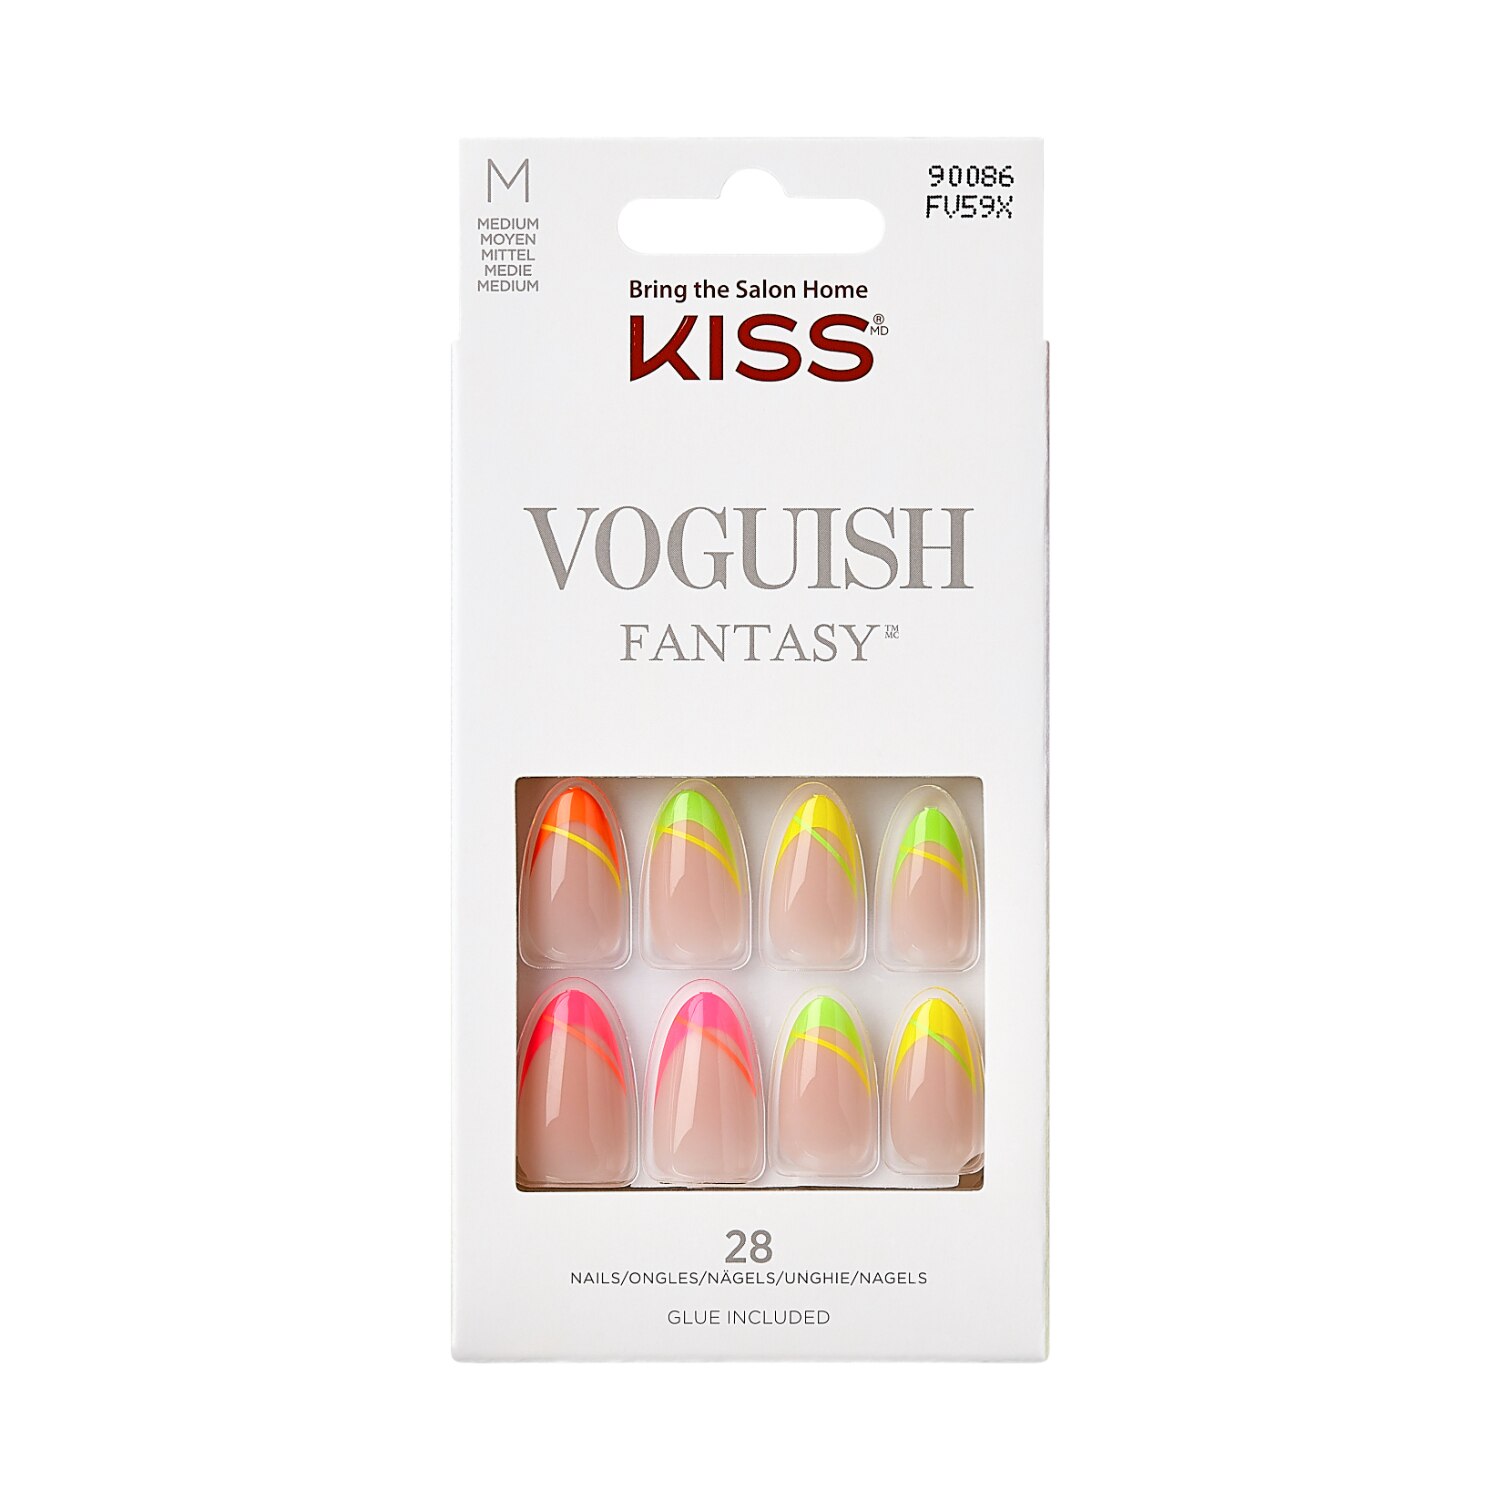 KISS Complete Salon Acrylic Kit Ingredients - CVS Pharmacy